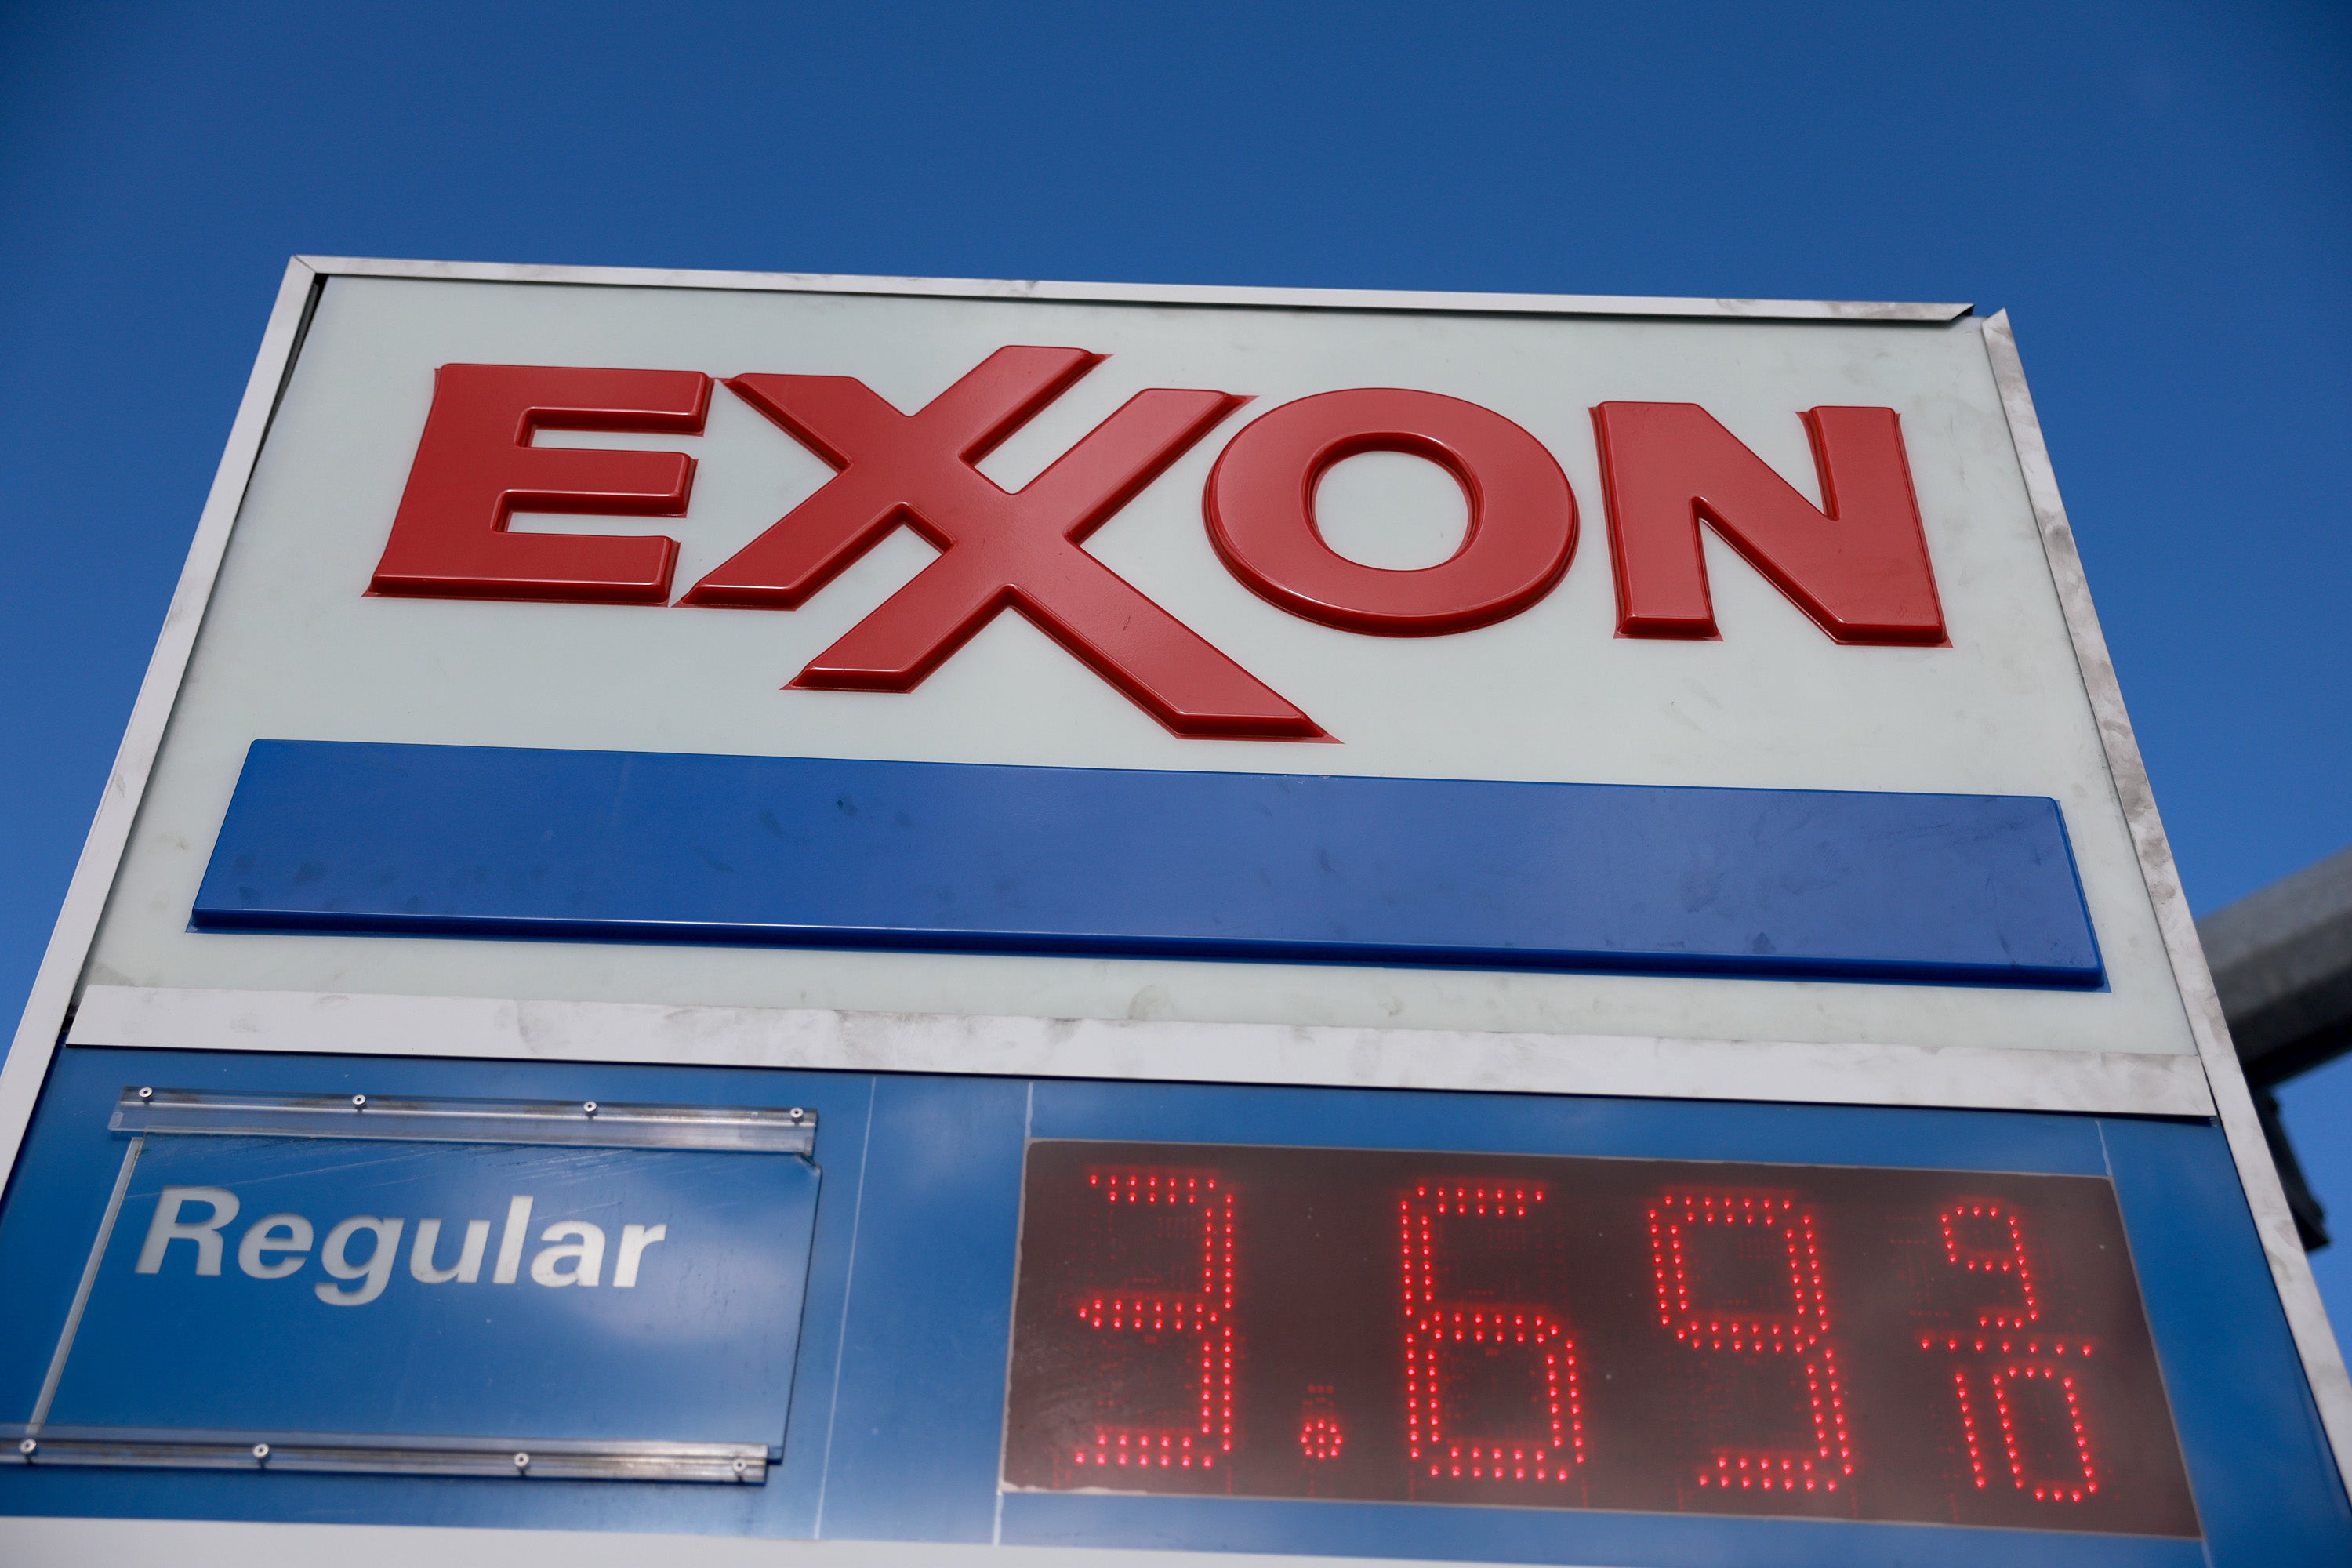 Exxon knew about climate change decades ago but denied it